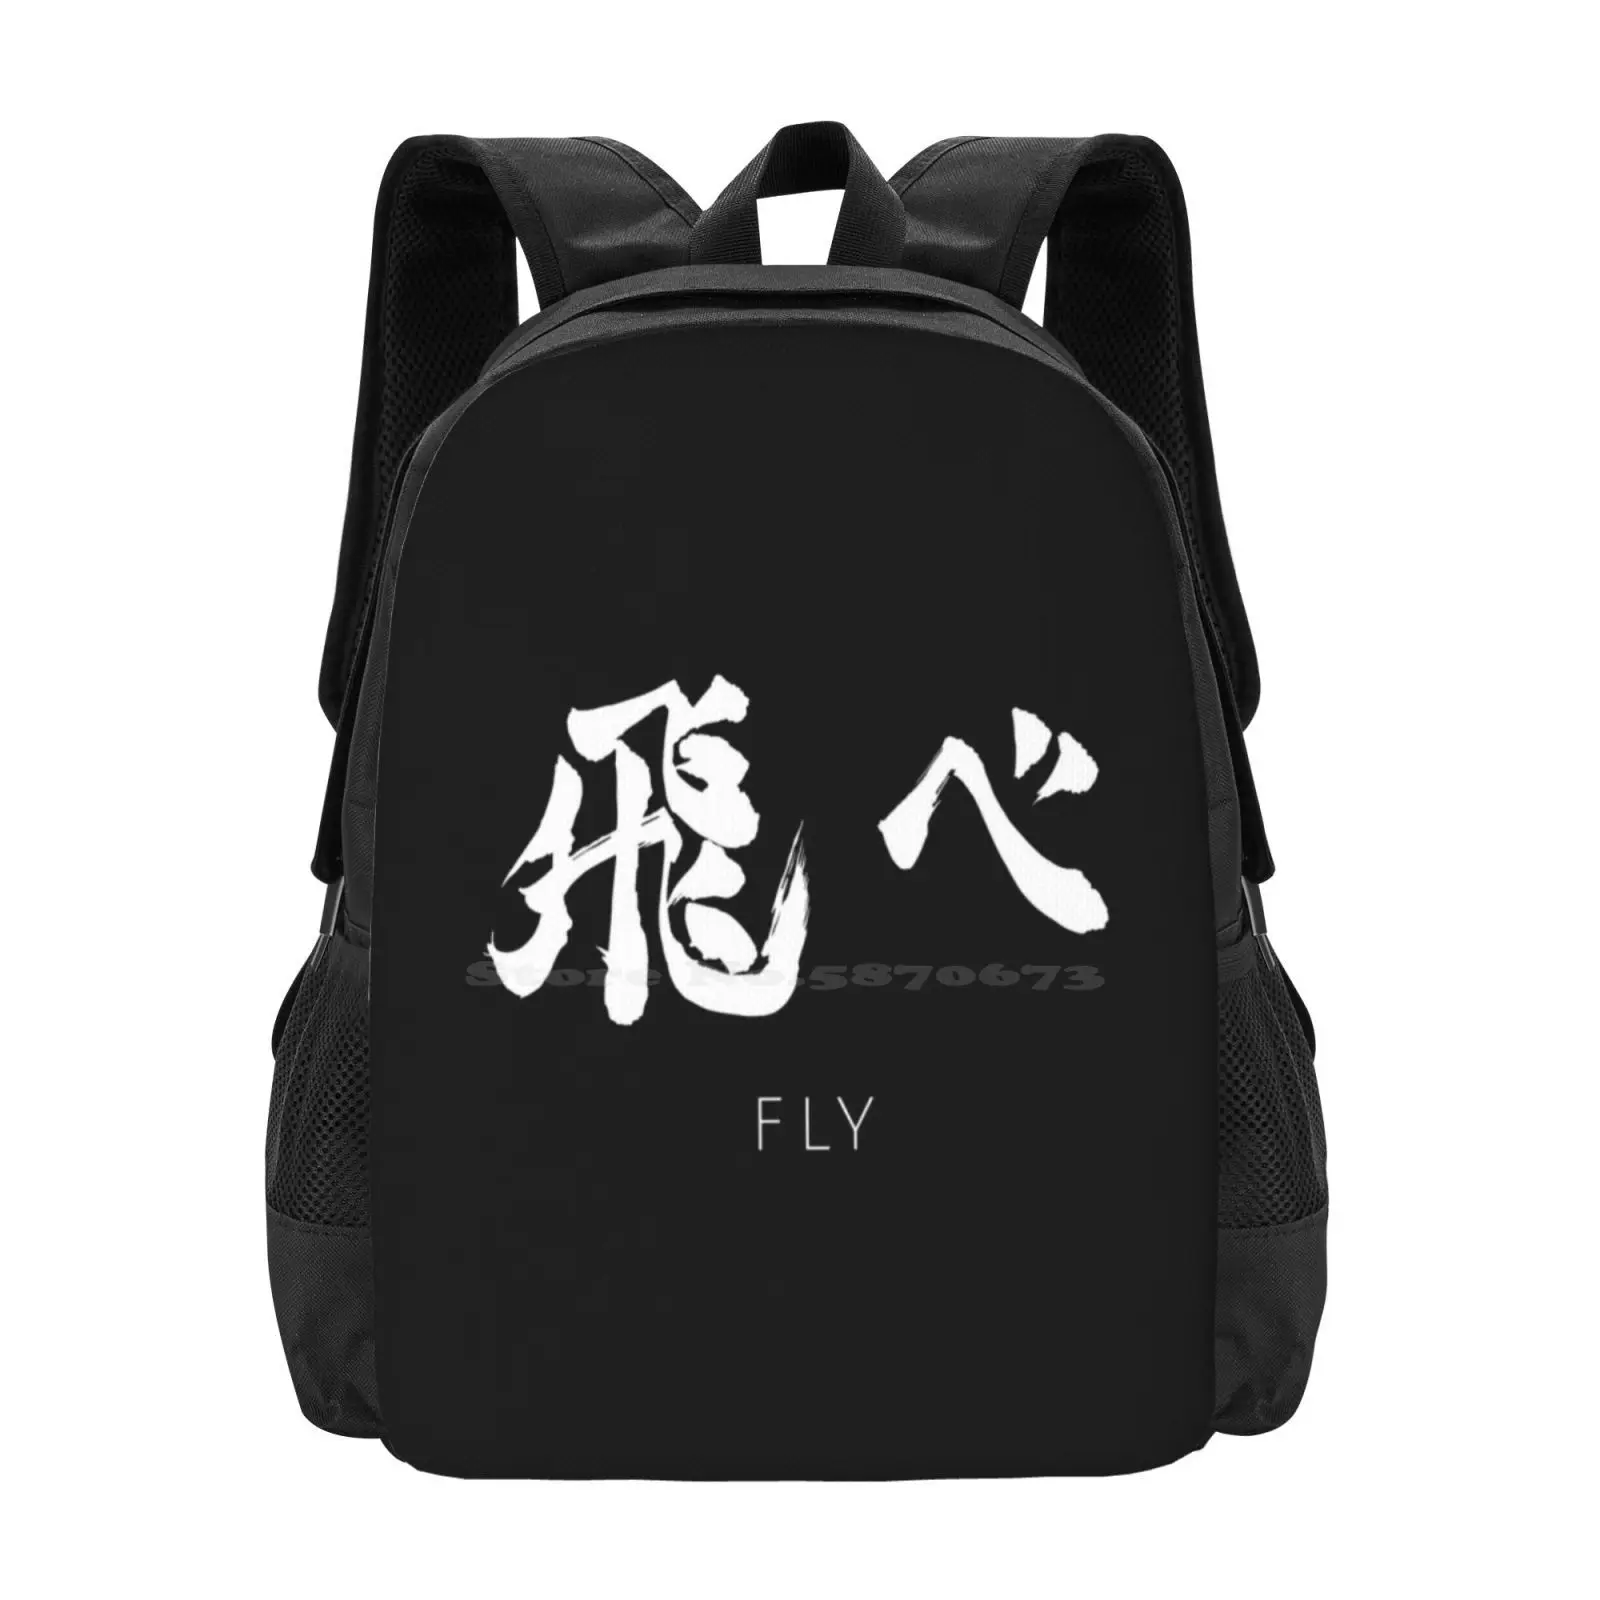 

Fly Karasuno Haikyuu Volleyball Team School Bags Travel Laptop Backpack Anime Manga Hinata Kageyama Tobio Nishinoya Sugawara